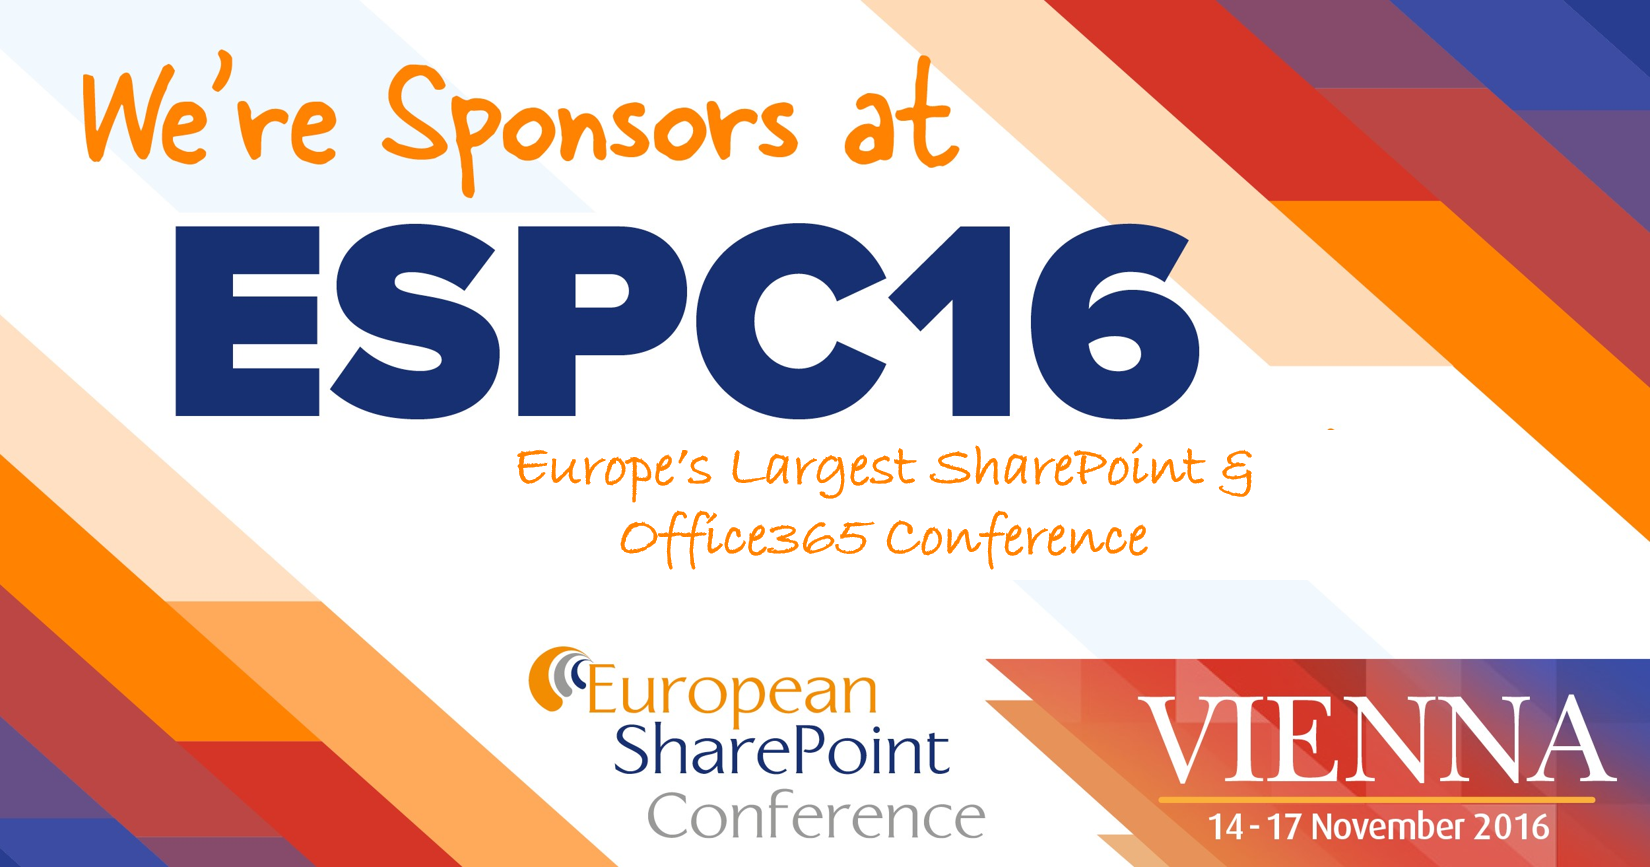 European SharePoint Conference 2016 Vienna BPI The destination for